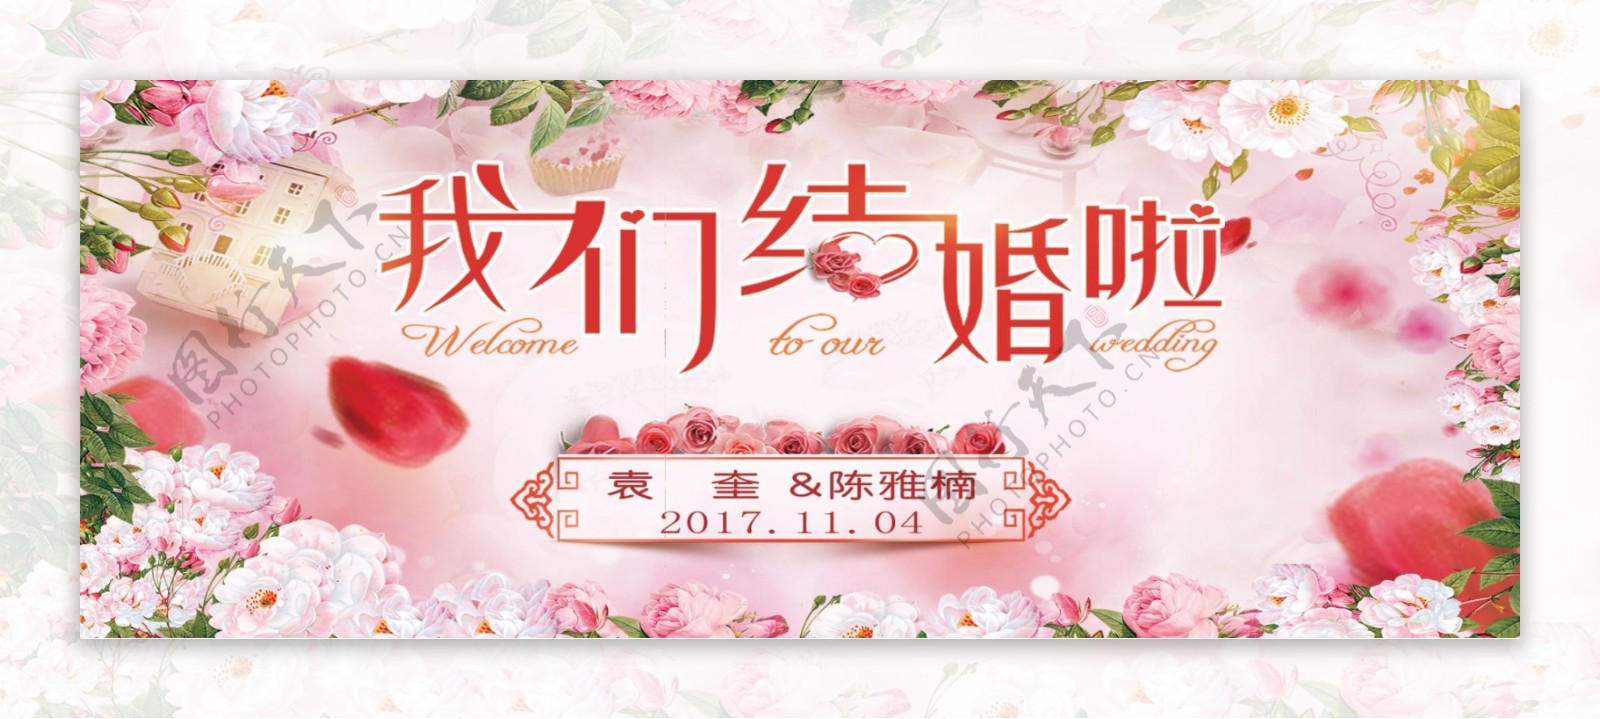 婚礼节日主背景图banner